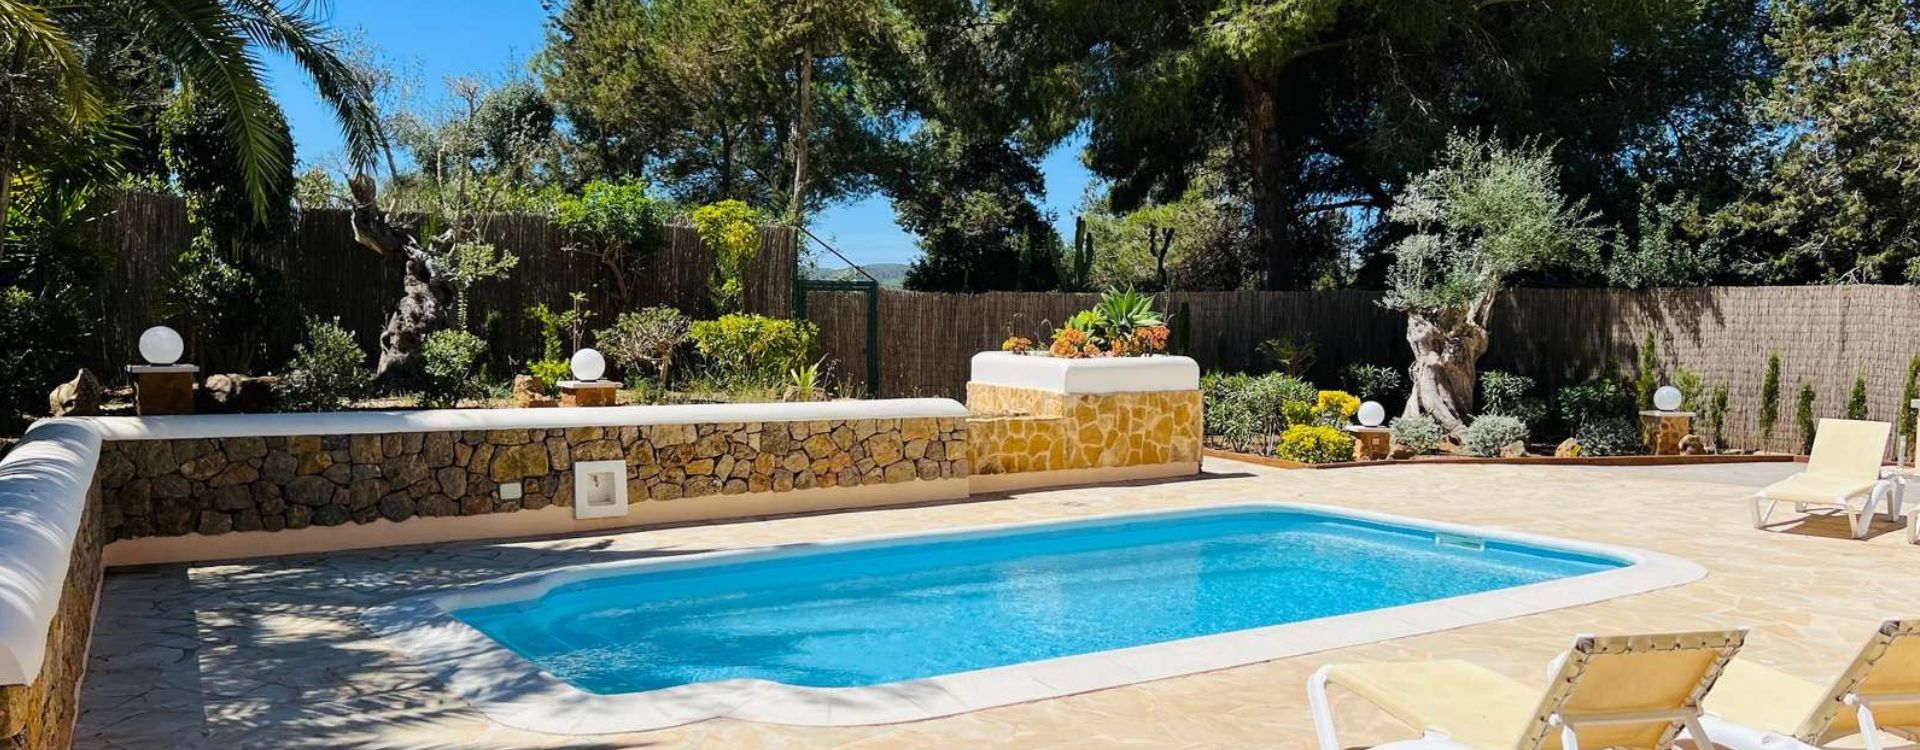 Ibiza, Casa Verde, Ibizadesk, villa rental, private pool